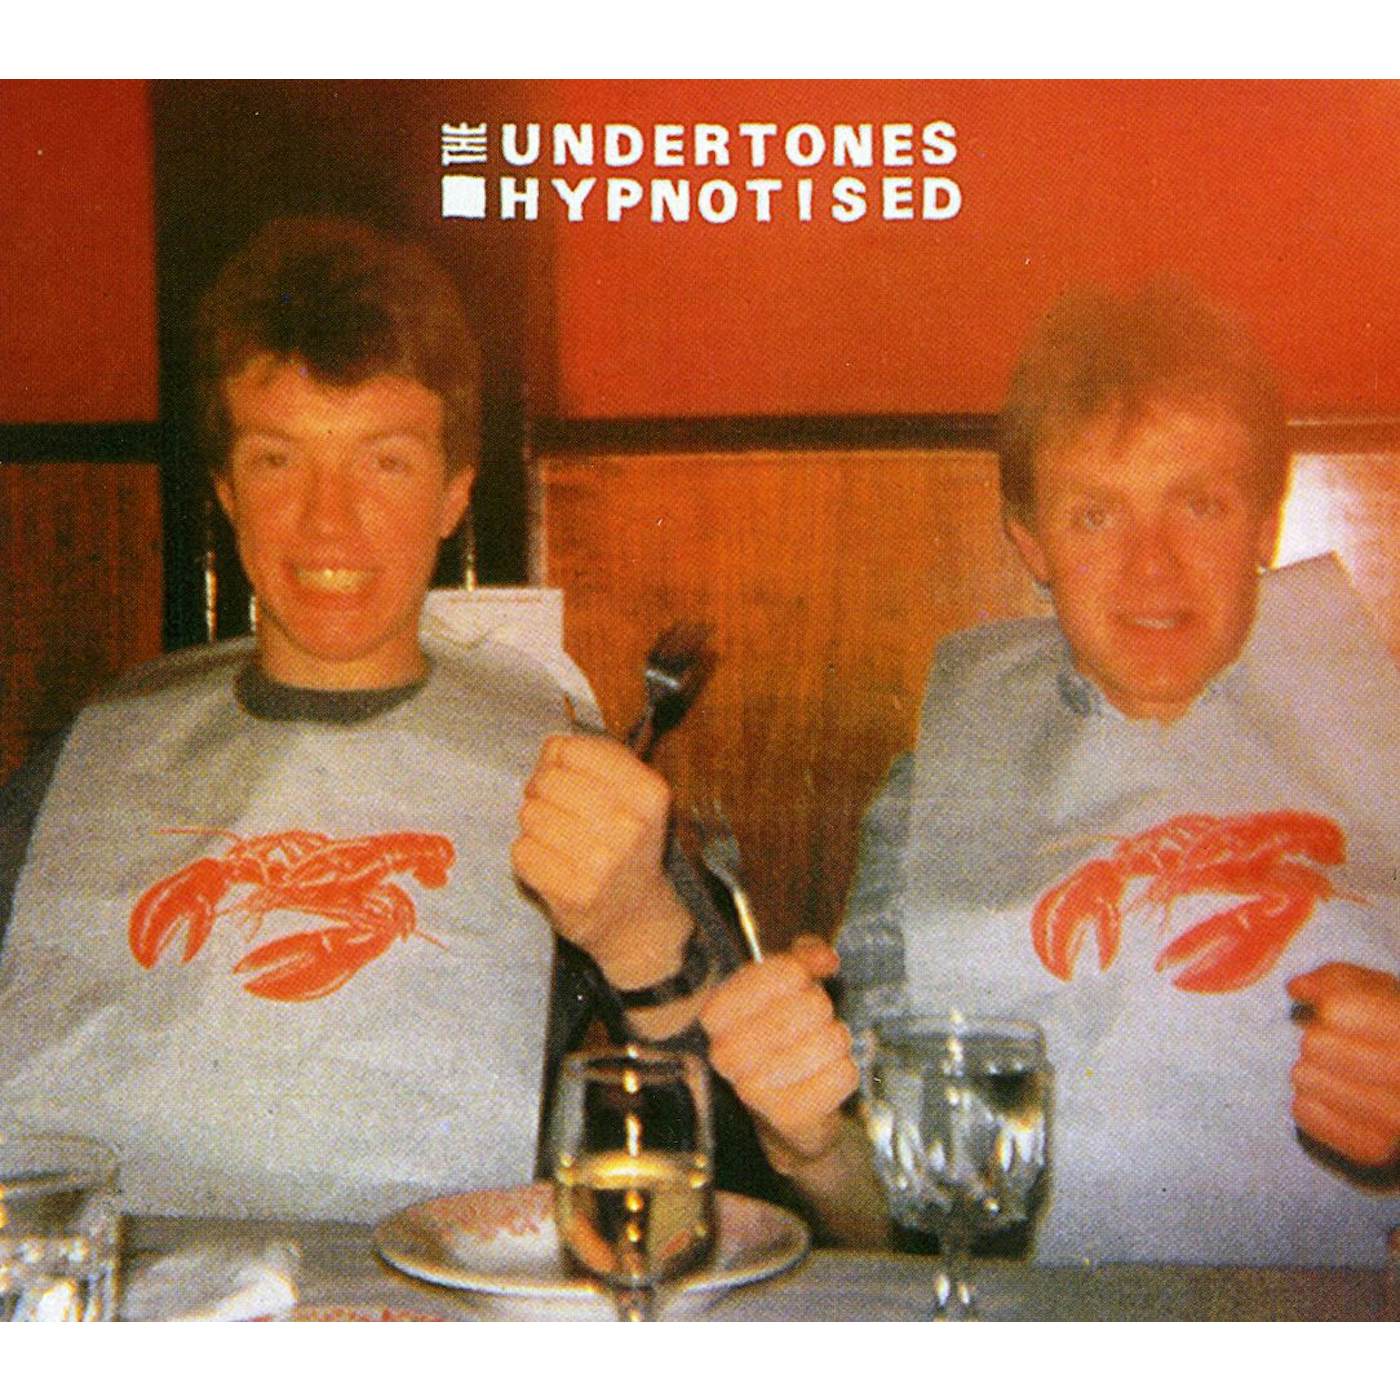 The Undertones HYPNOTISED CD